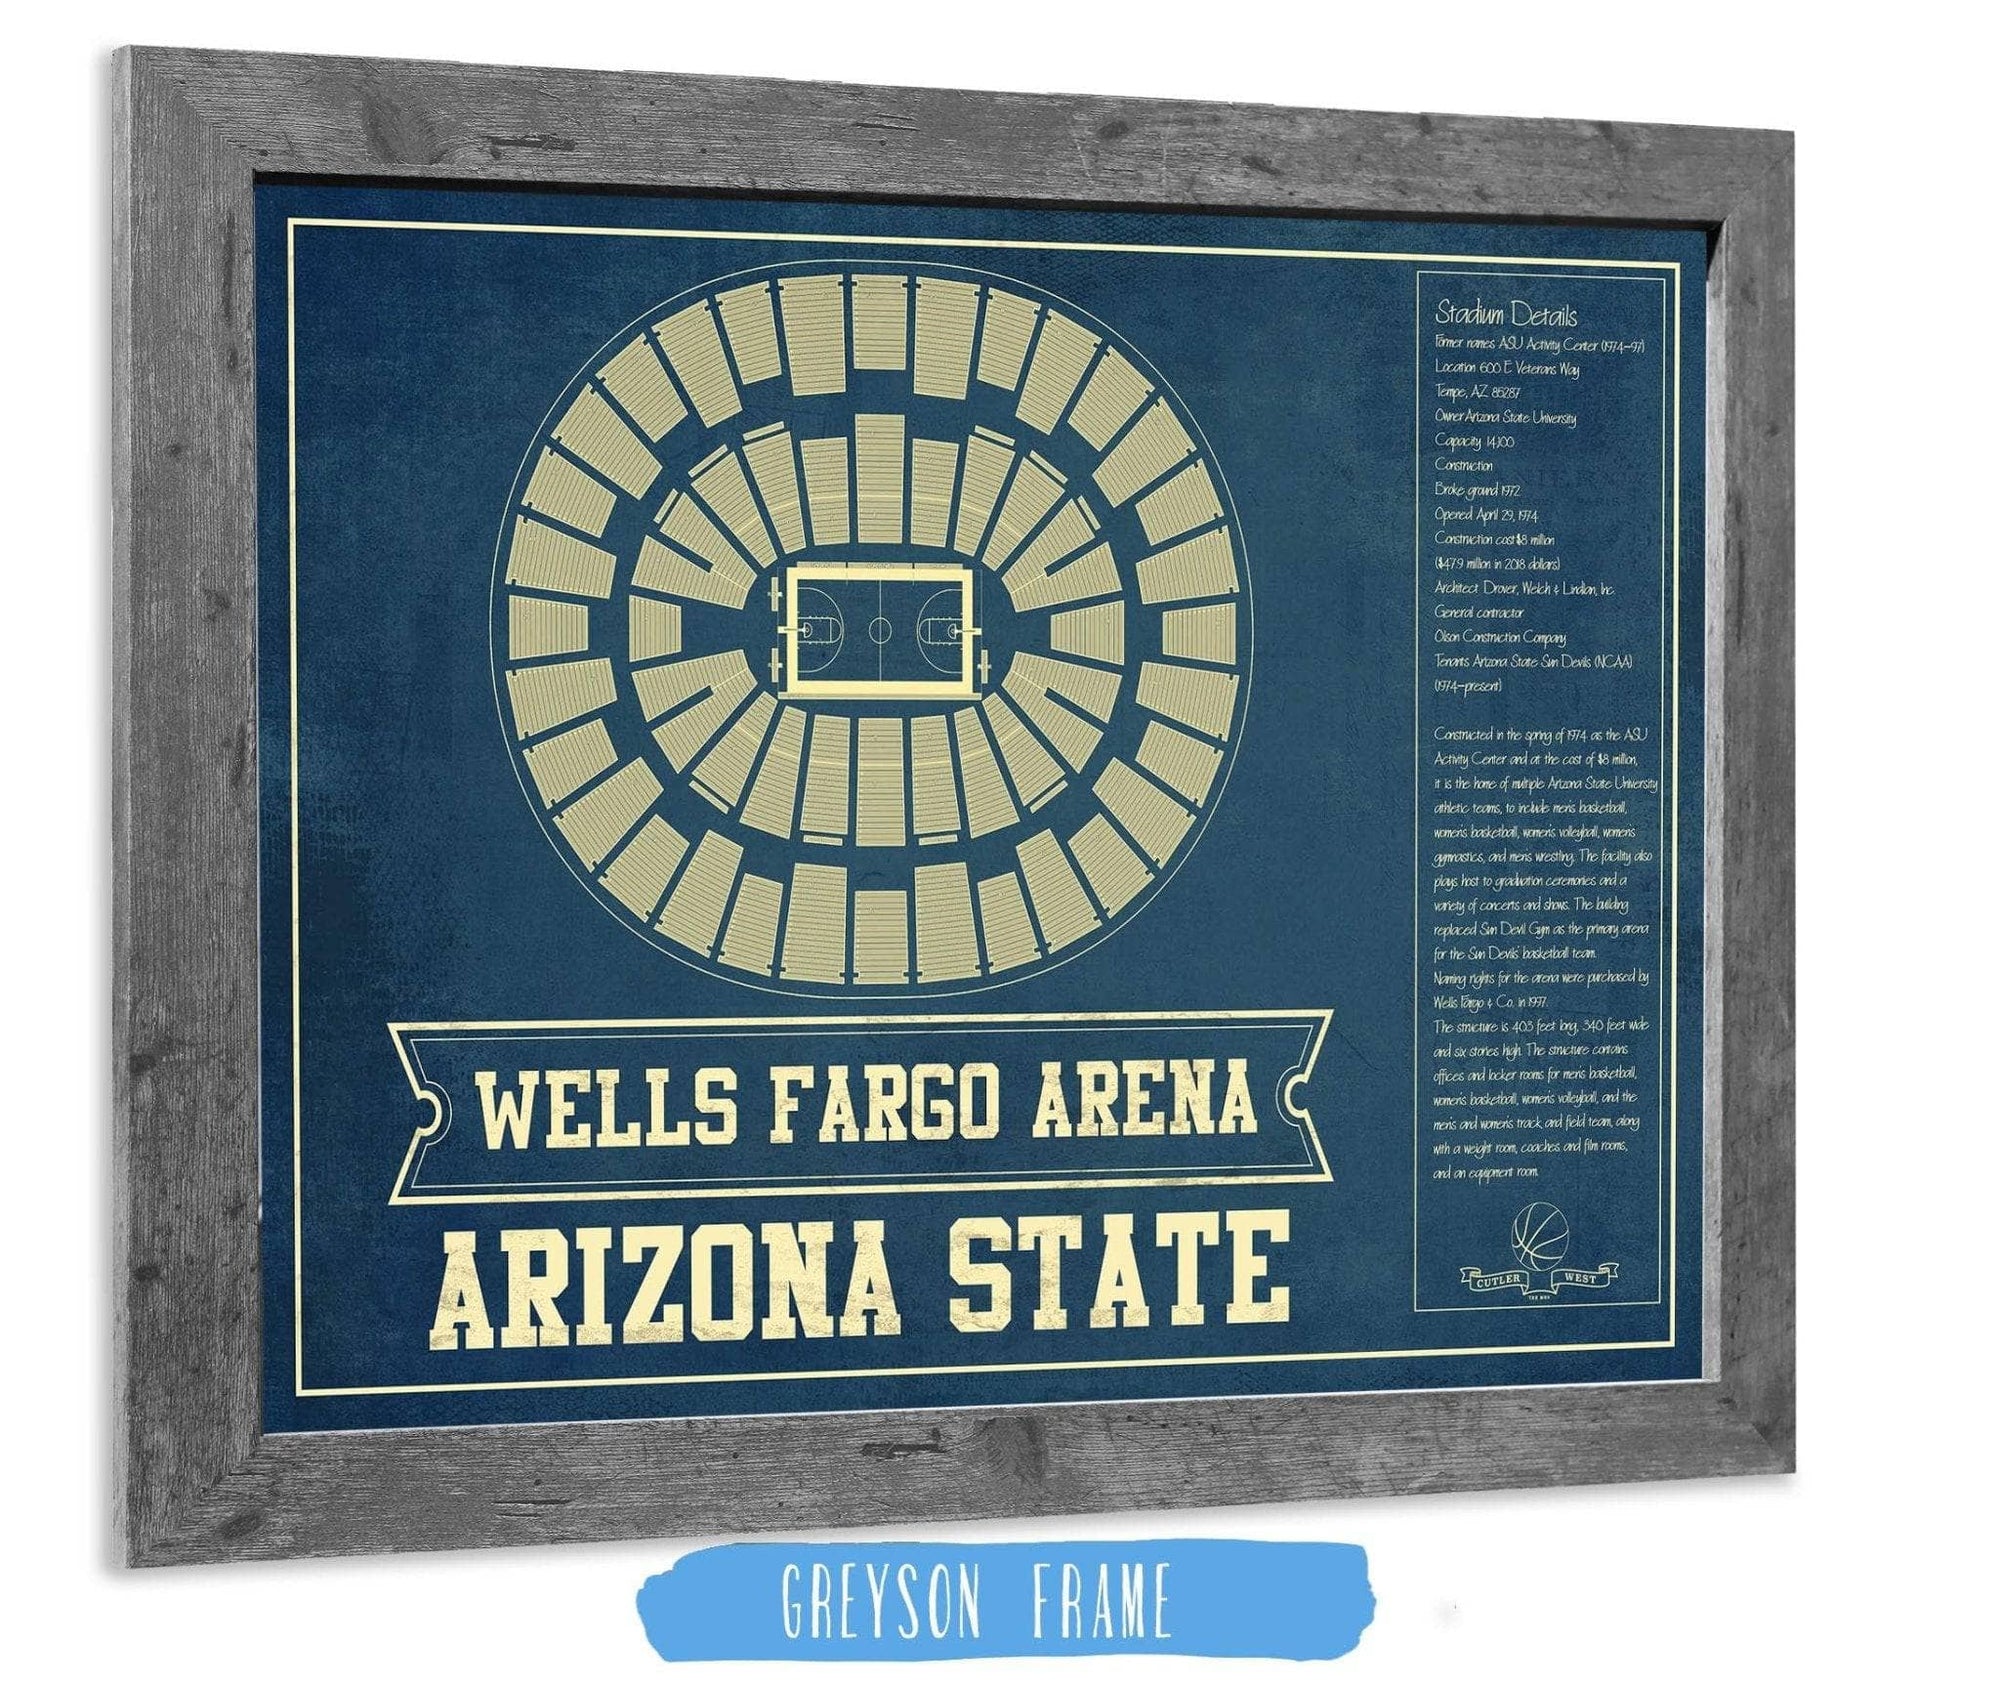 Cutler West Basketball Collection 14" x 11" / Greyson Frame Arizona State University Wells Fargo Arena 933350229_82839